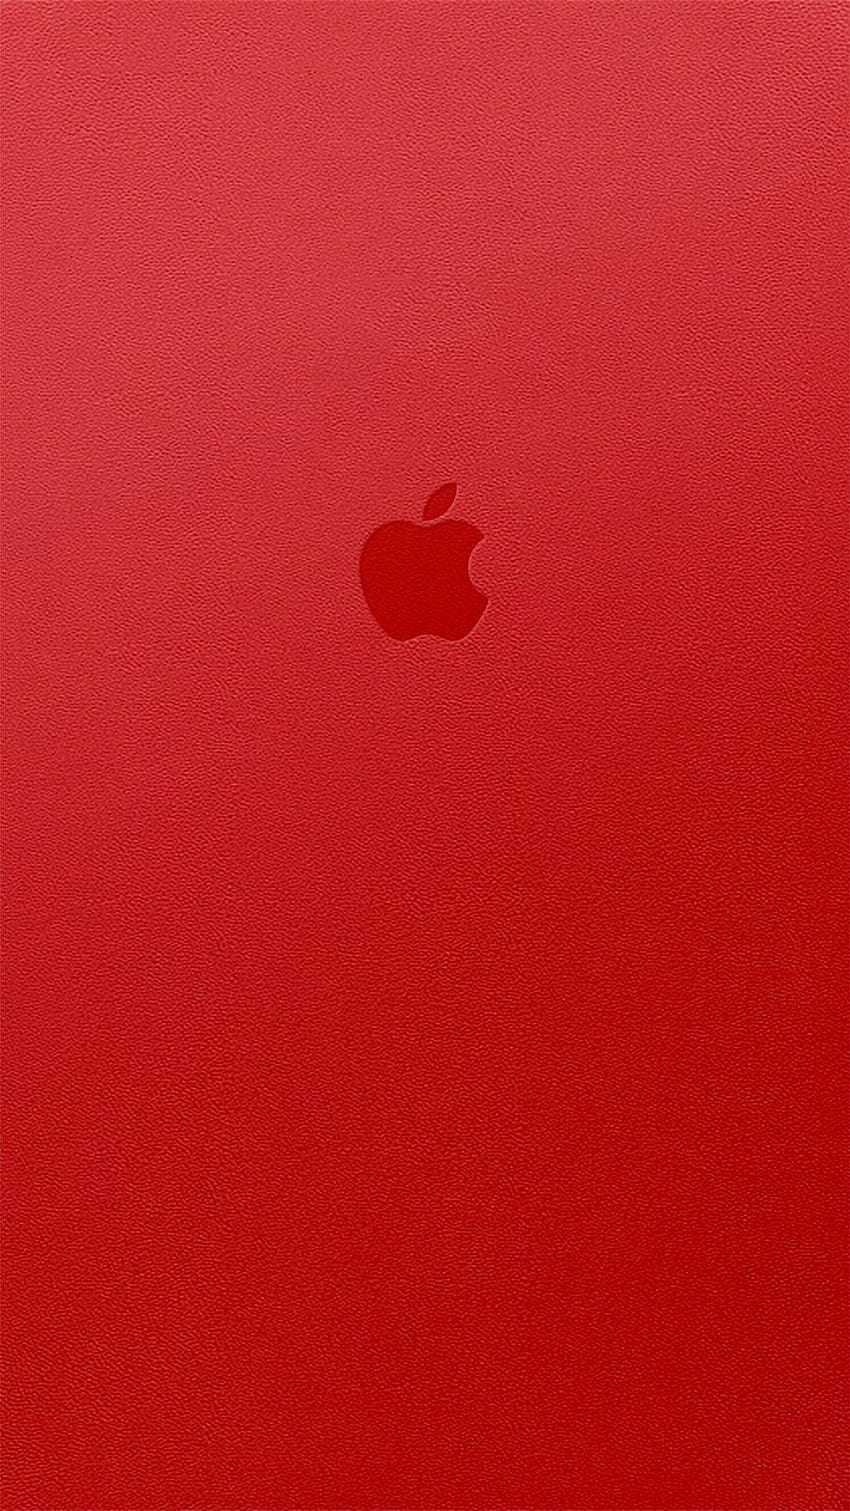 8 Rotes iPhone, Apple iPhone 6 HD-Handy-Hintergrundbild